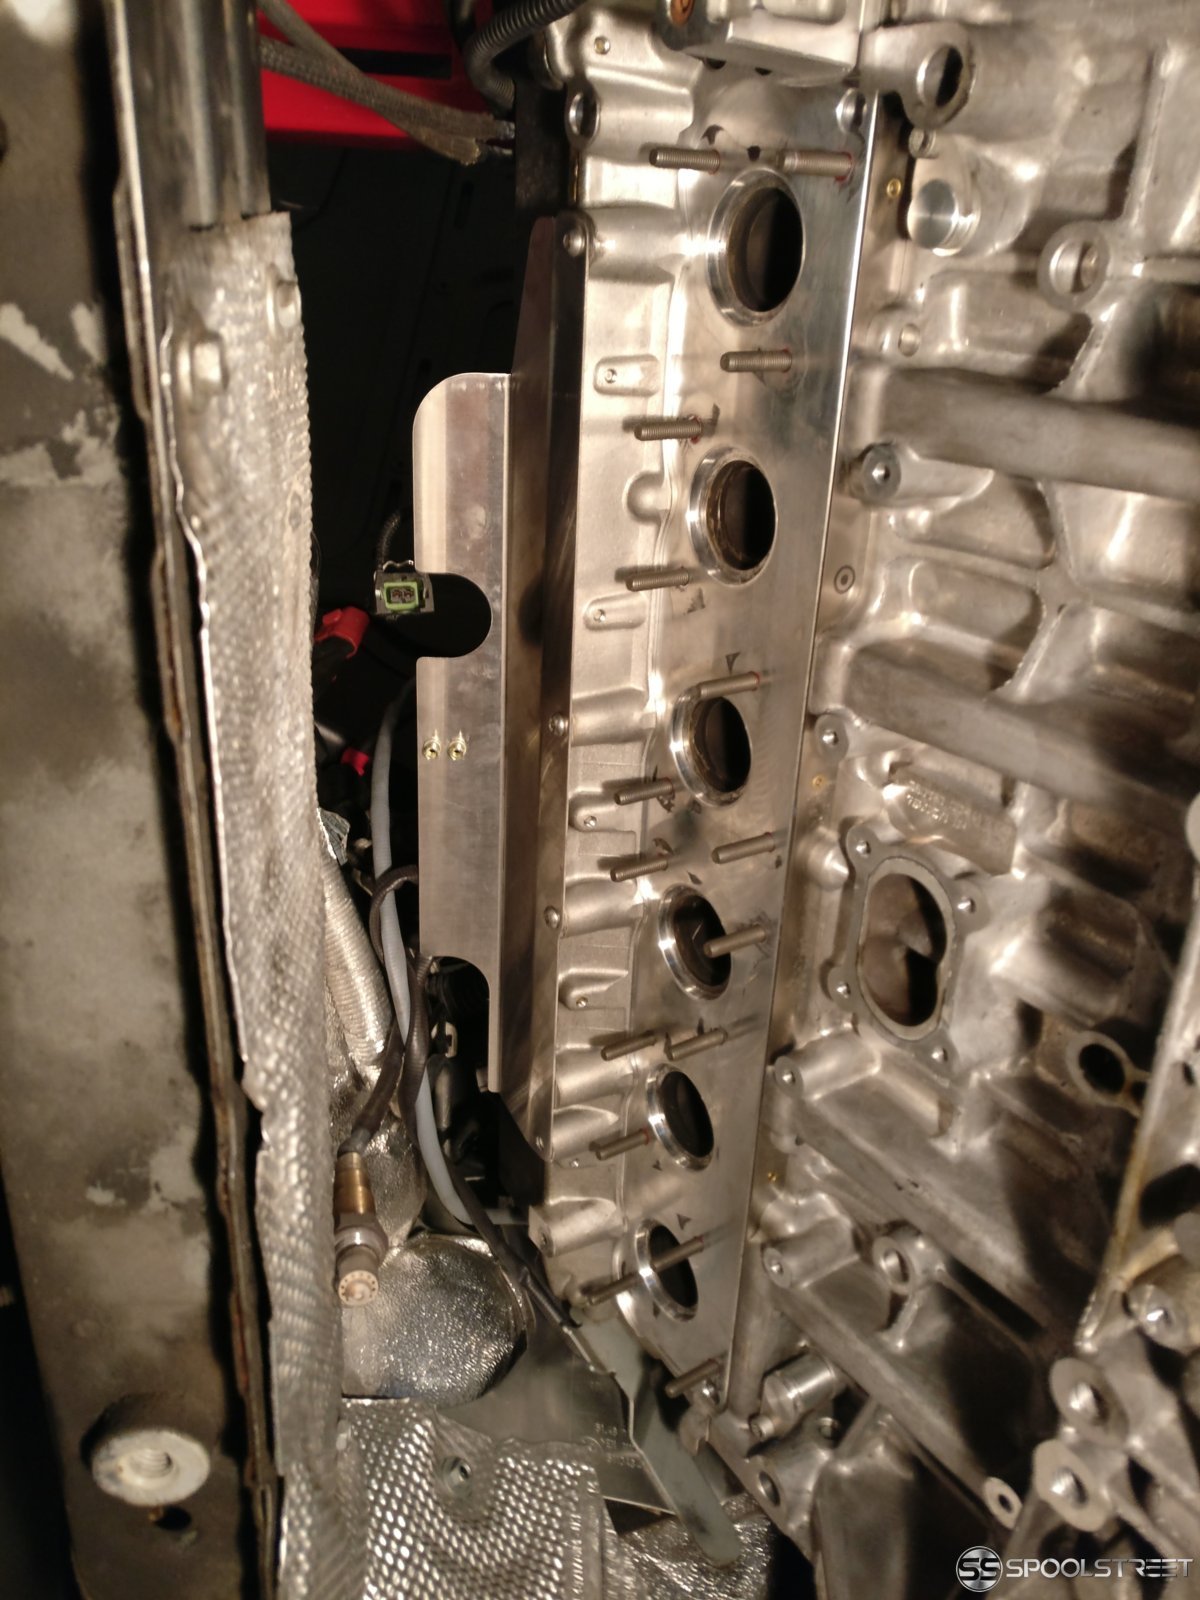 Exhaust Manifold studs Installed